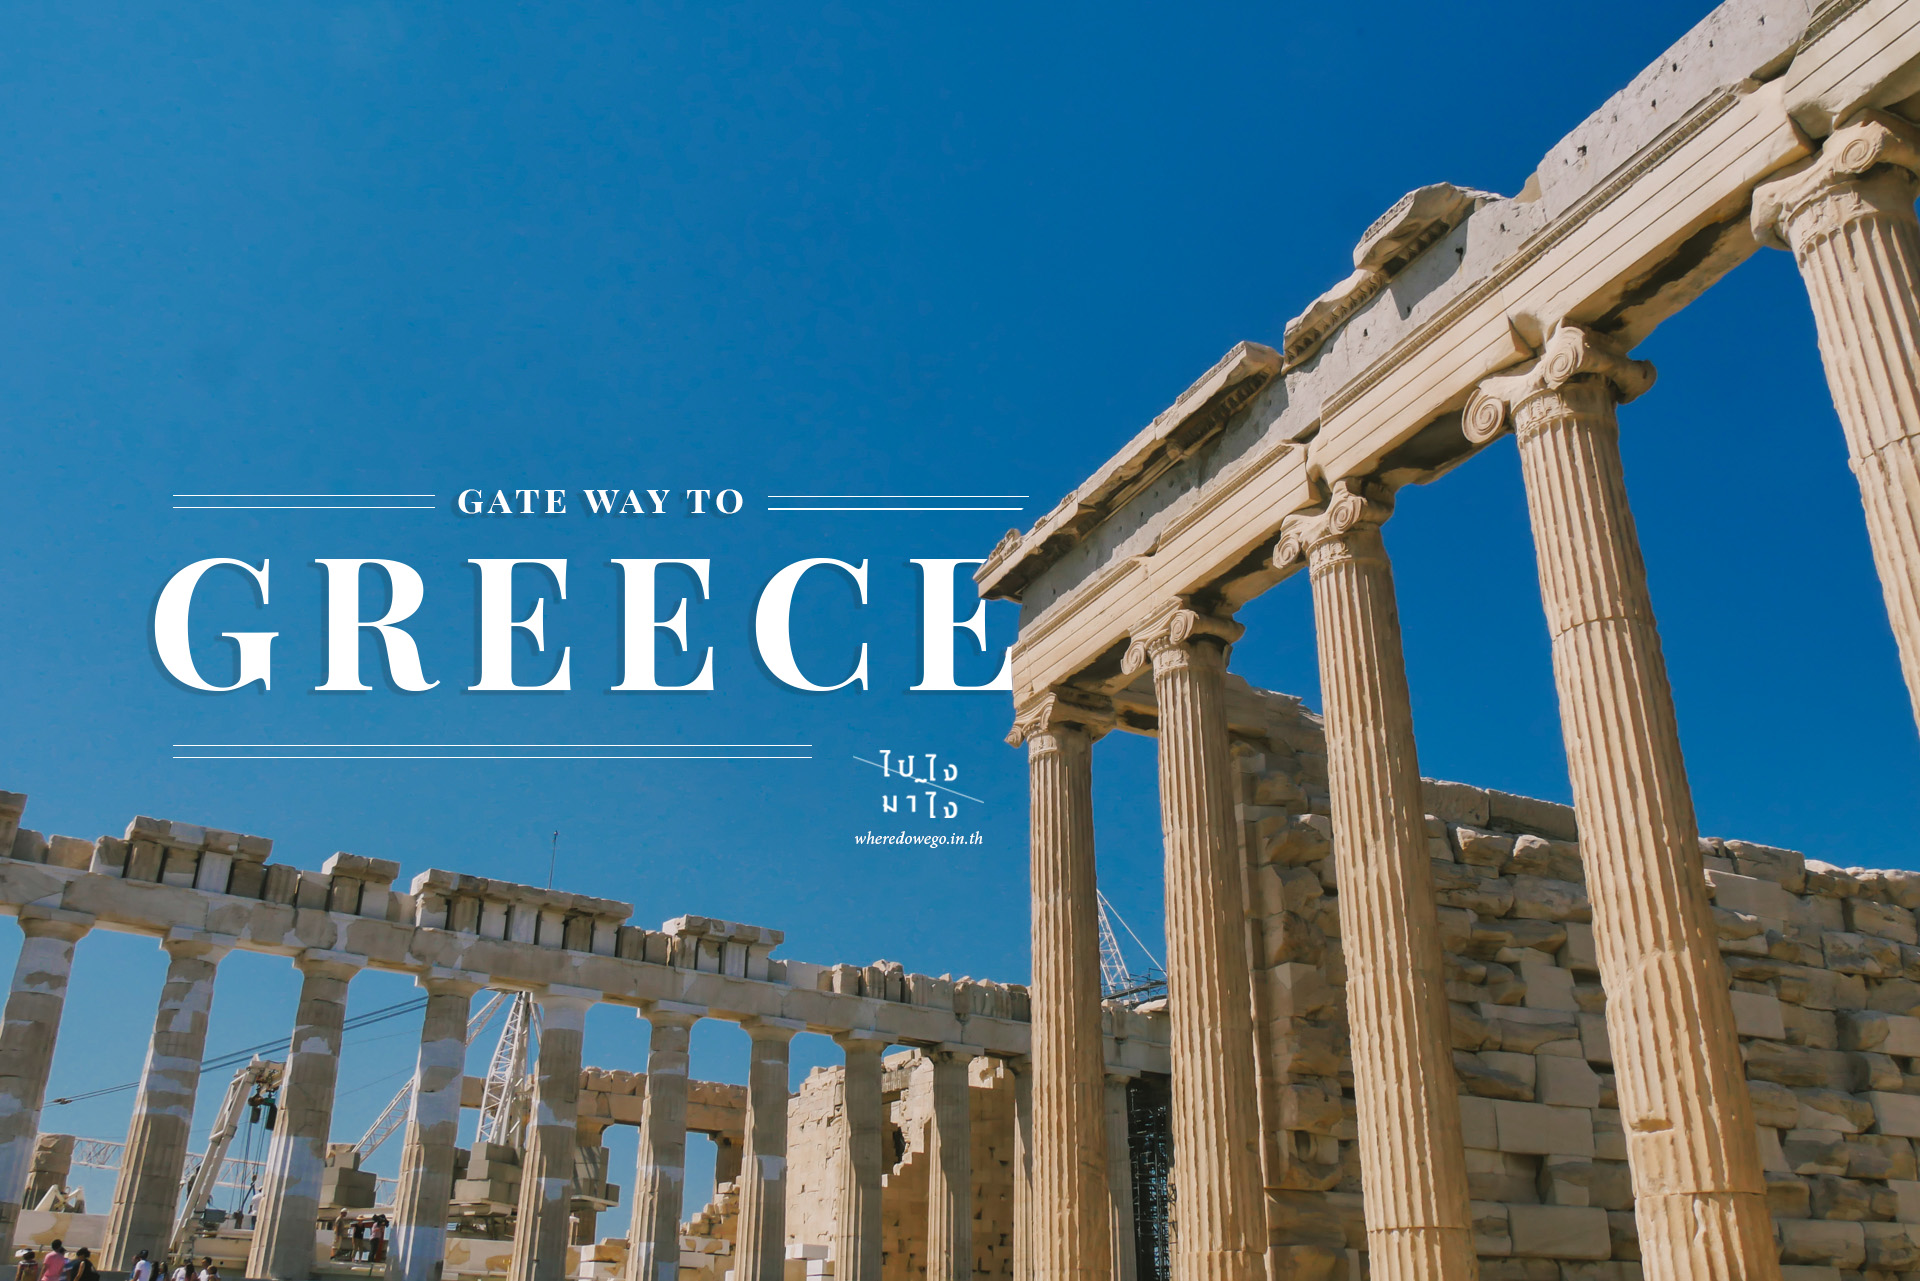 Gate Way to GREECE